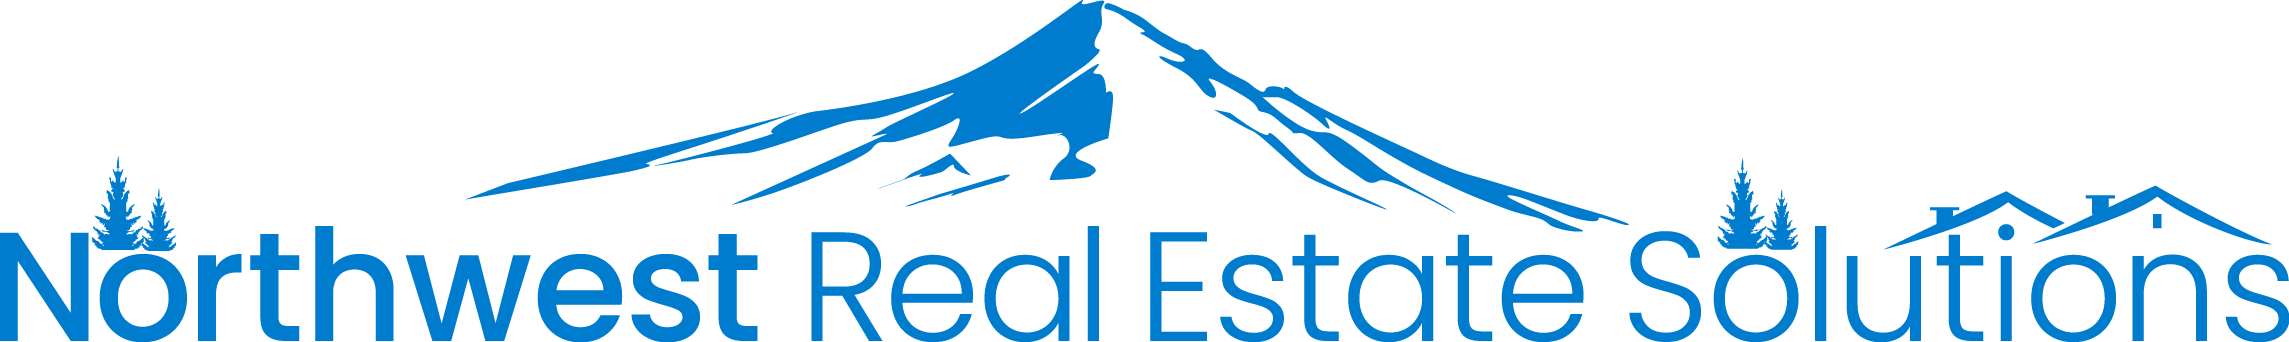 Northwest Real Estate Solutions logo